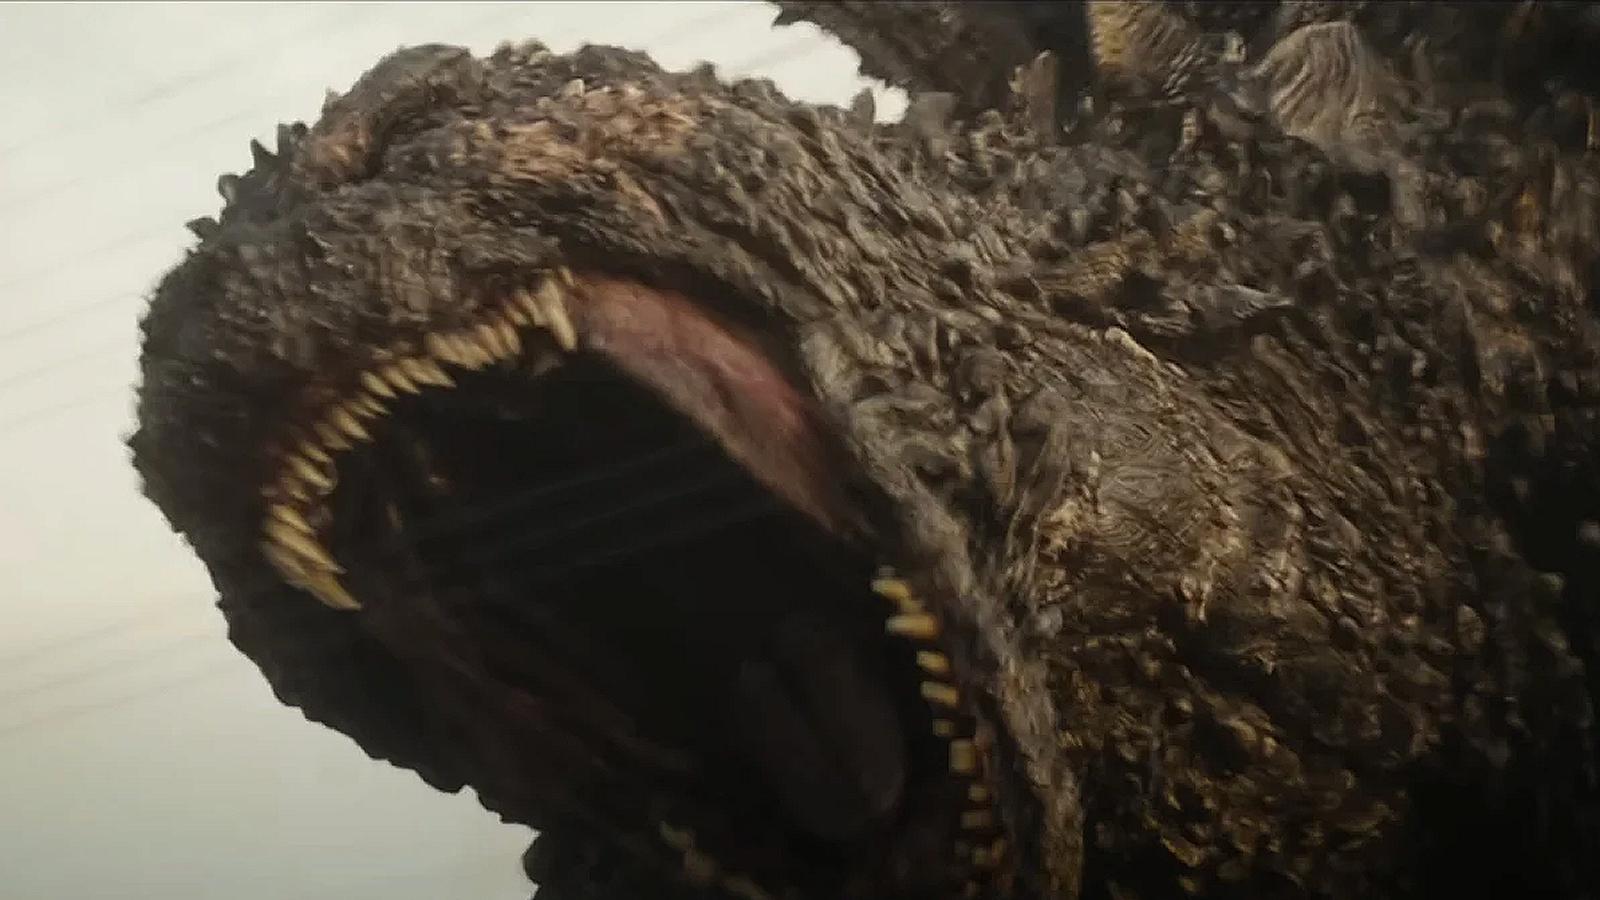 Godzilla roaring in Godzilla Minus One